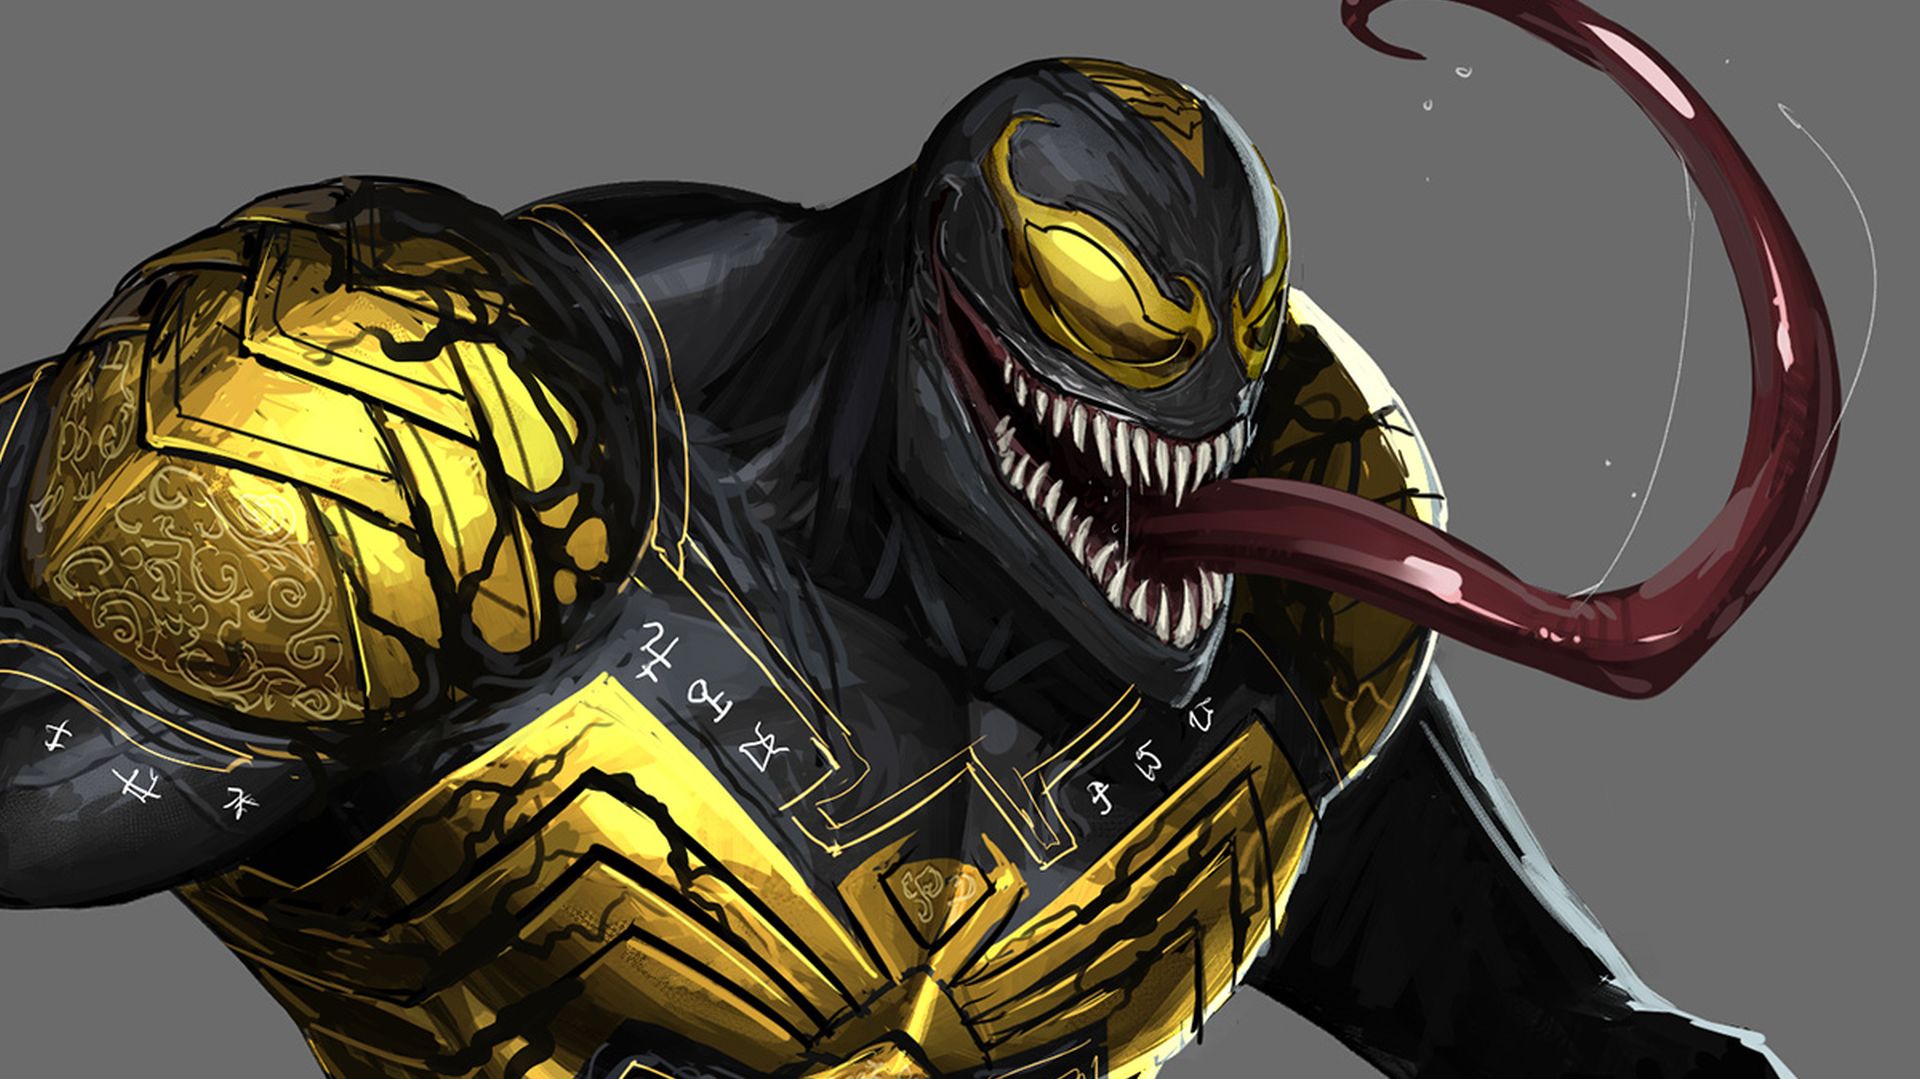 Marvel's Midnight Suns season will include Venom and Deadpool